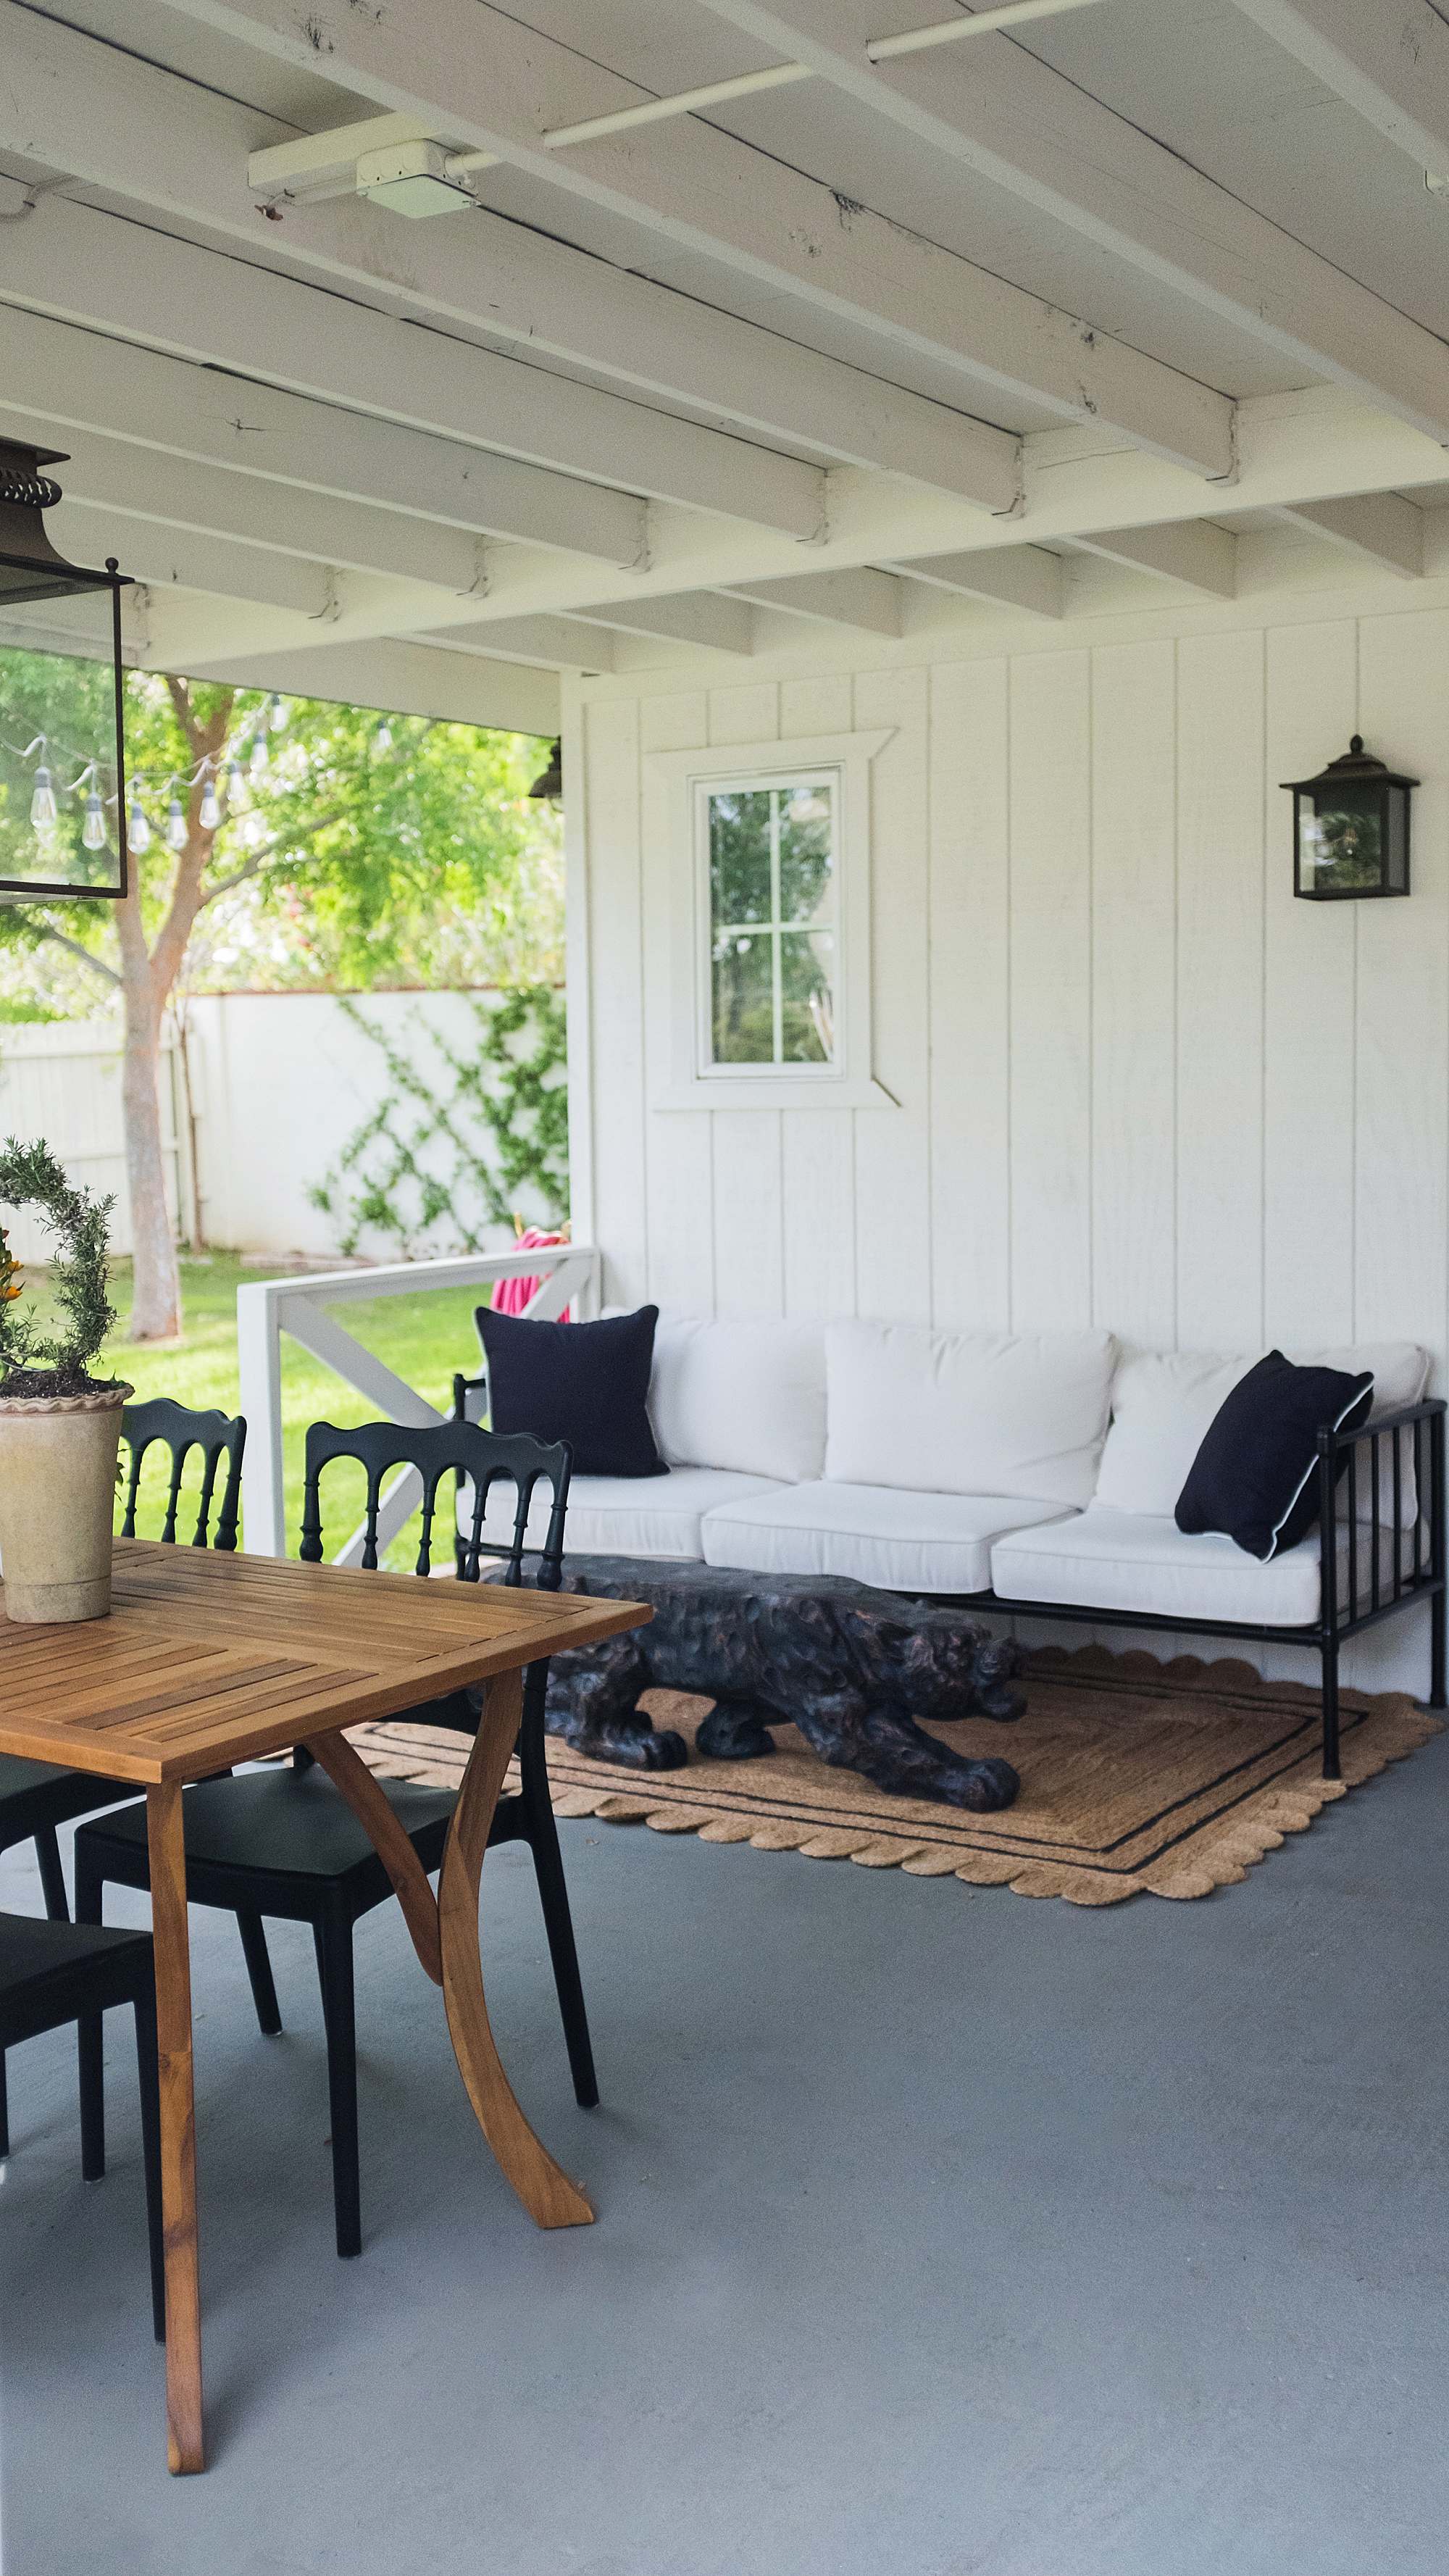 Target fernhill patio furniture set Hermosa Rectangular Acacia Wood Dining Table -Teak Finish - Christopher Knight Home